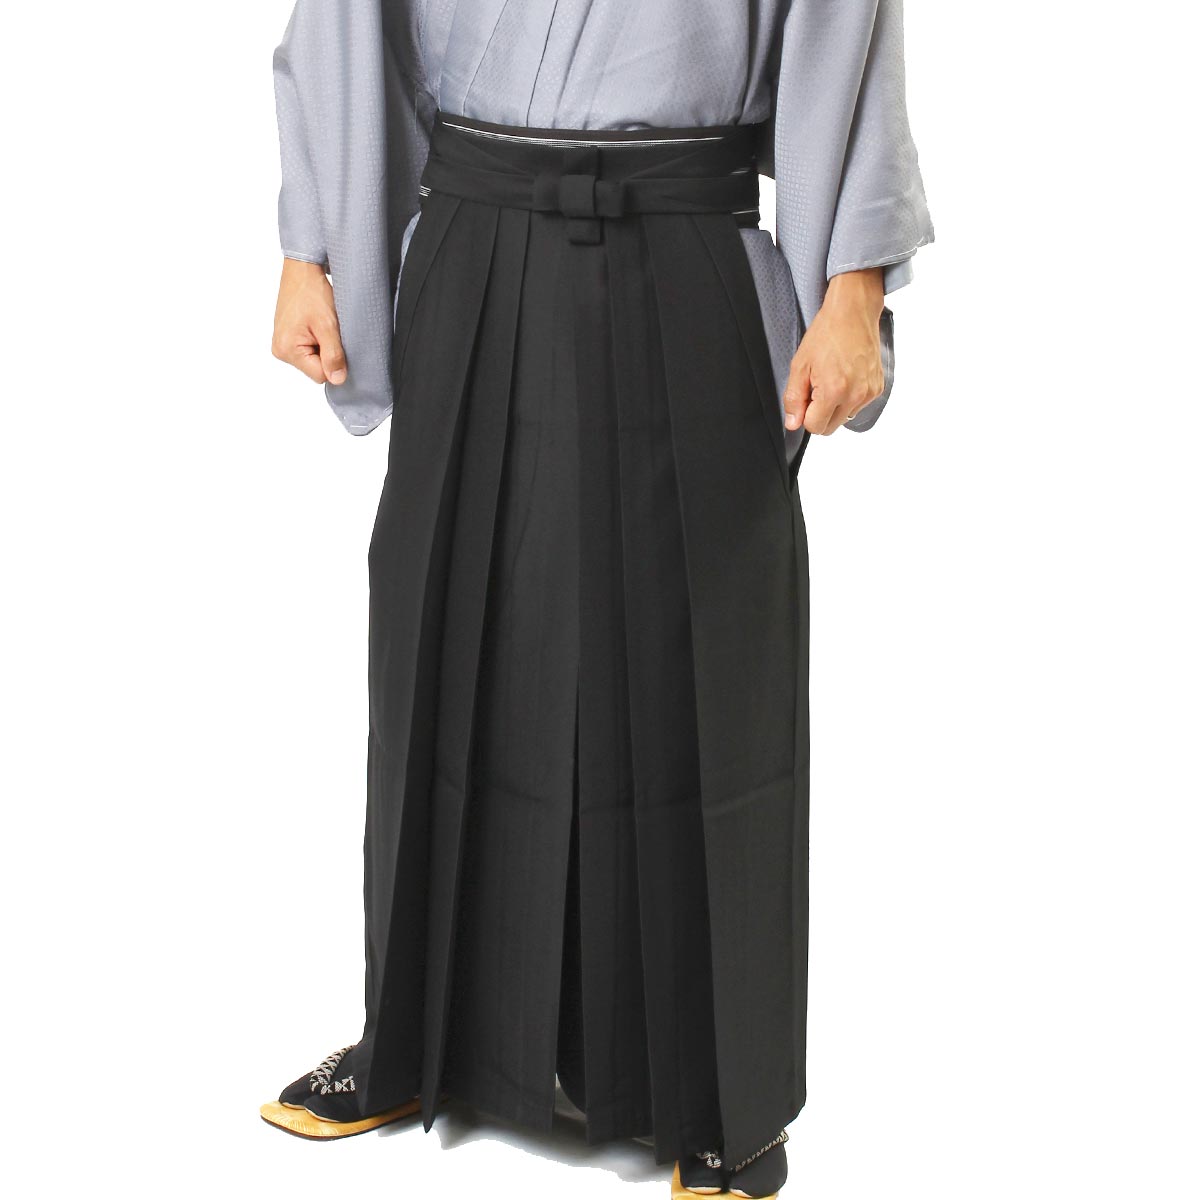 HAKAMA Umanori Japanese Men's Traditional Kimono Black L or LL Size 